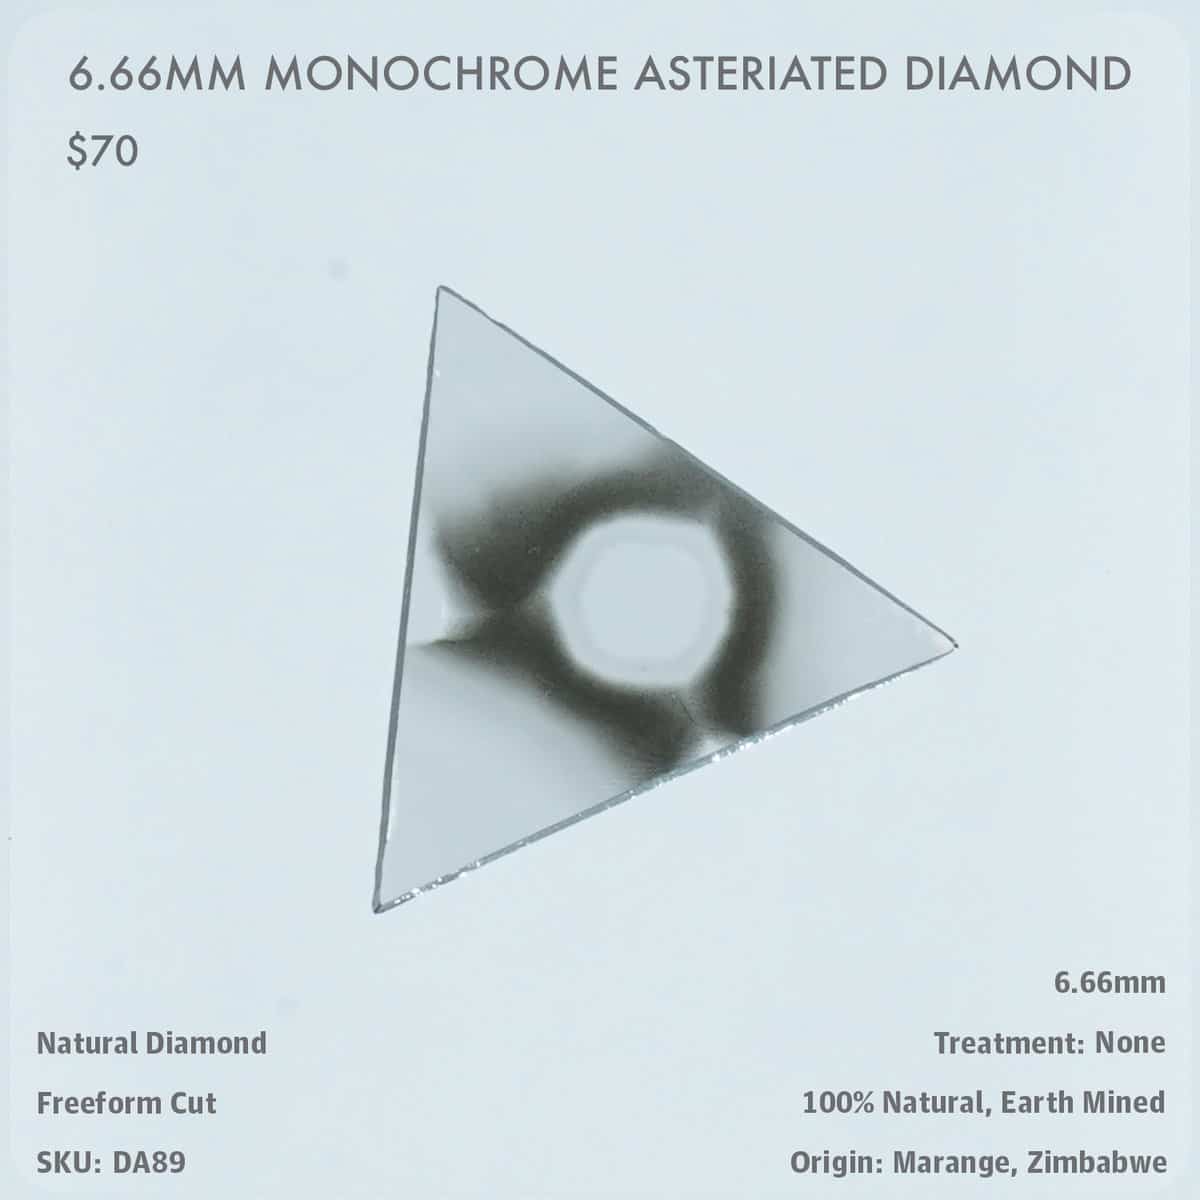 6.66mm Monochrome Asteriated Diamond